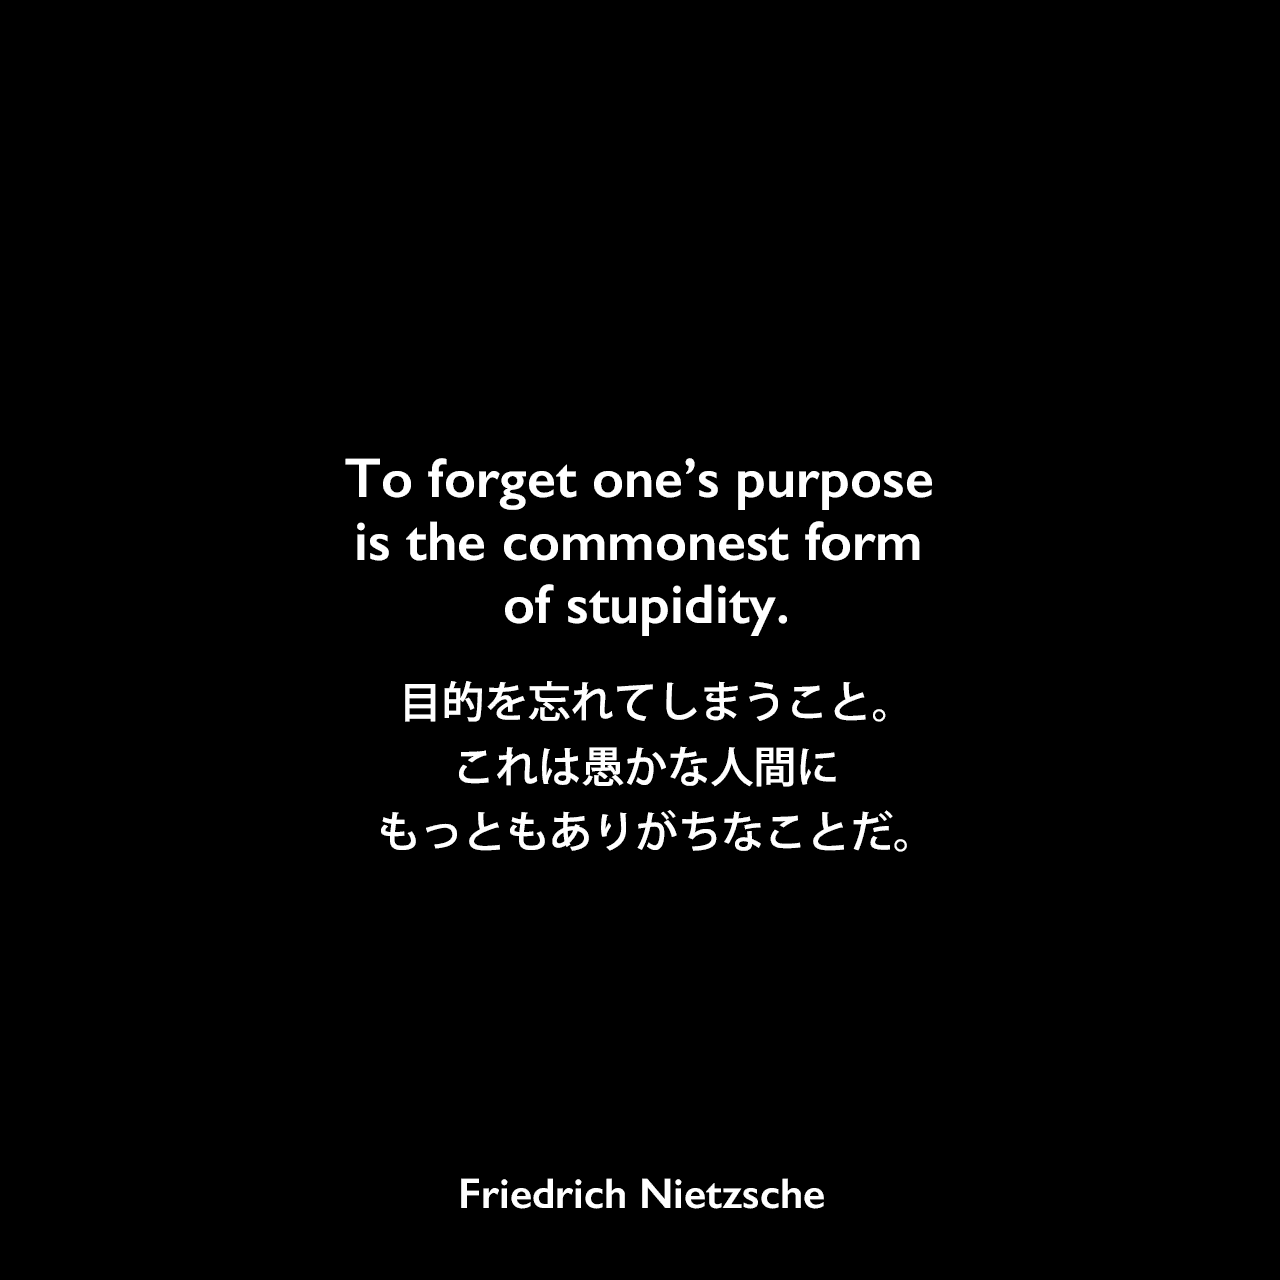 To forget one’s purpose is the commonest form of stupidity.目的を忘れてしまうこと。これは愚かな人間にもっともありがちなことだ。Friedrich Nietzsche